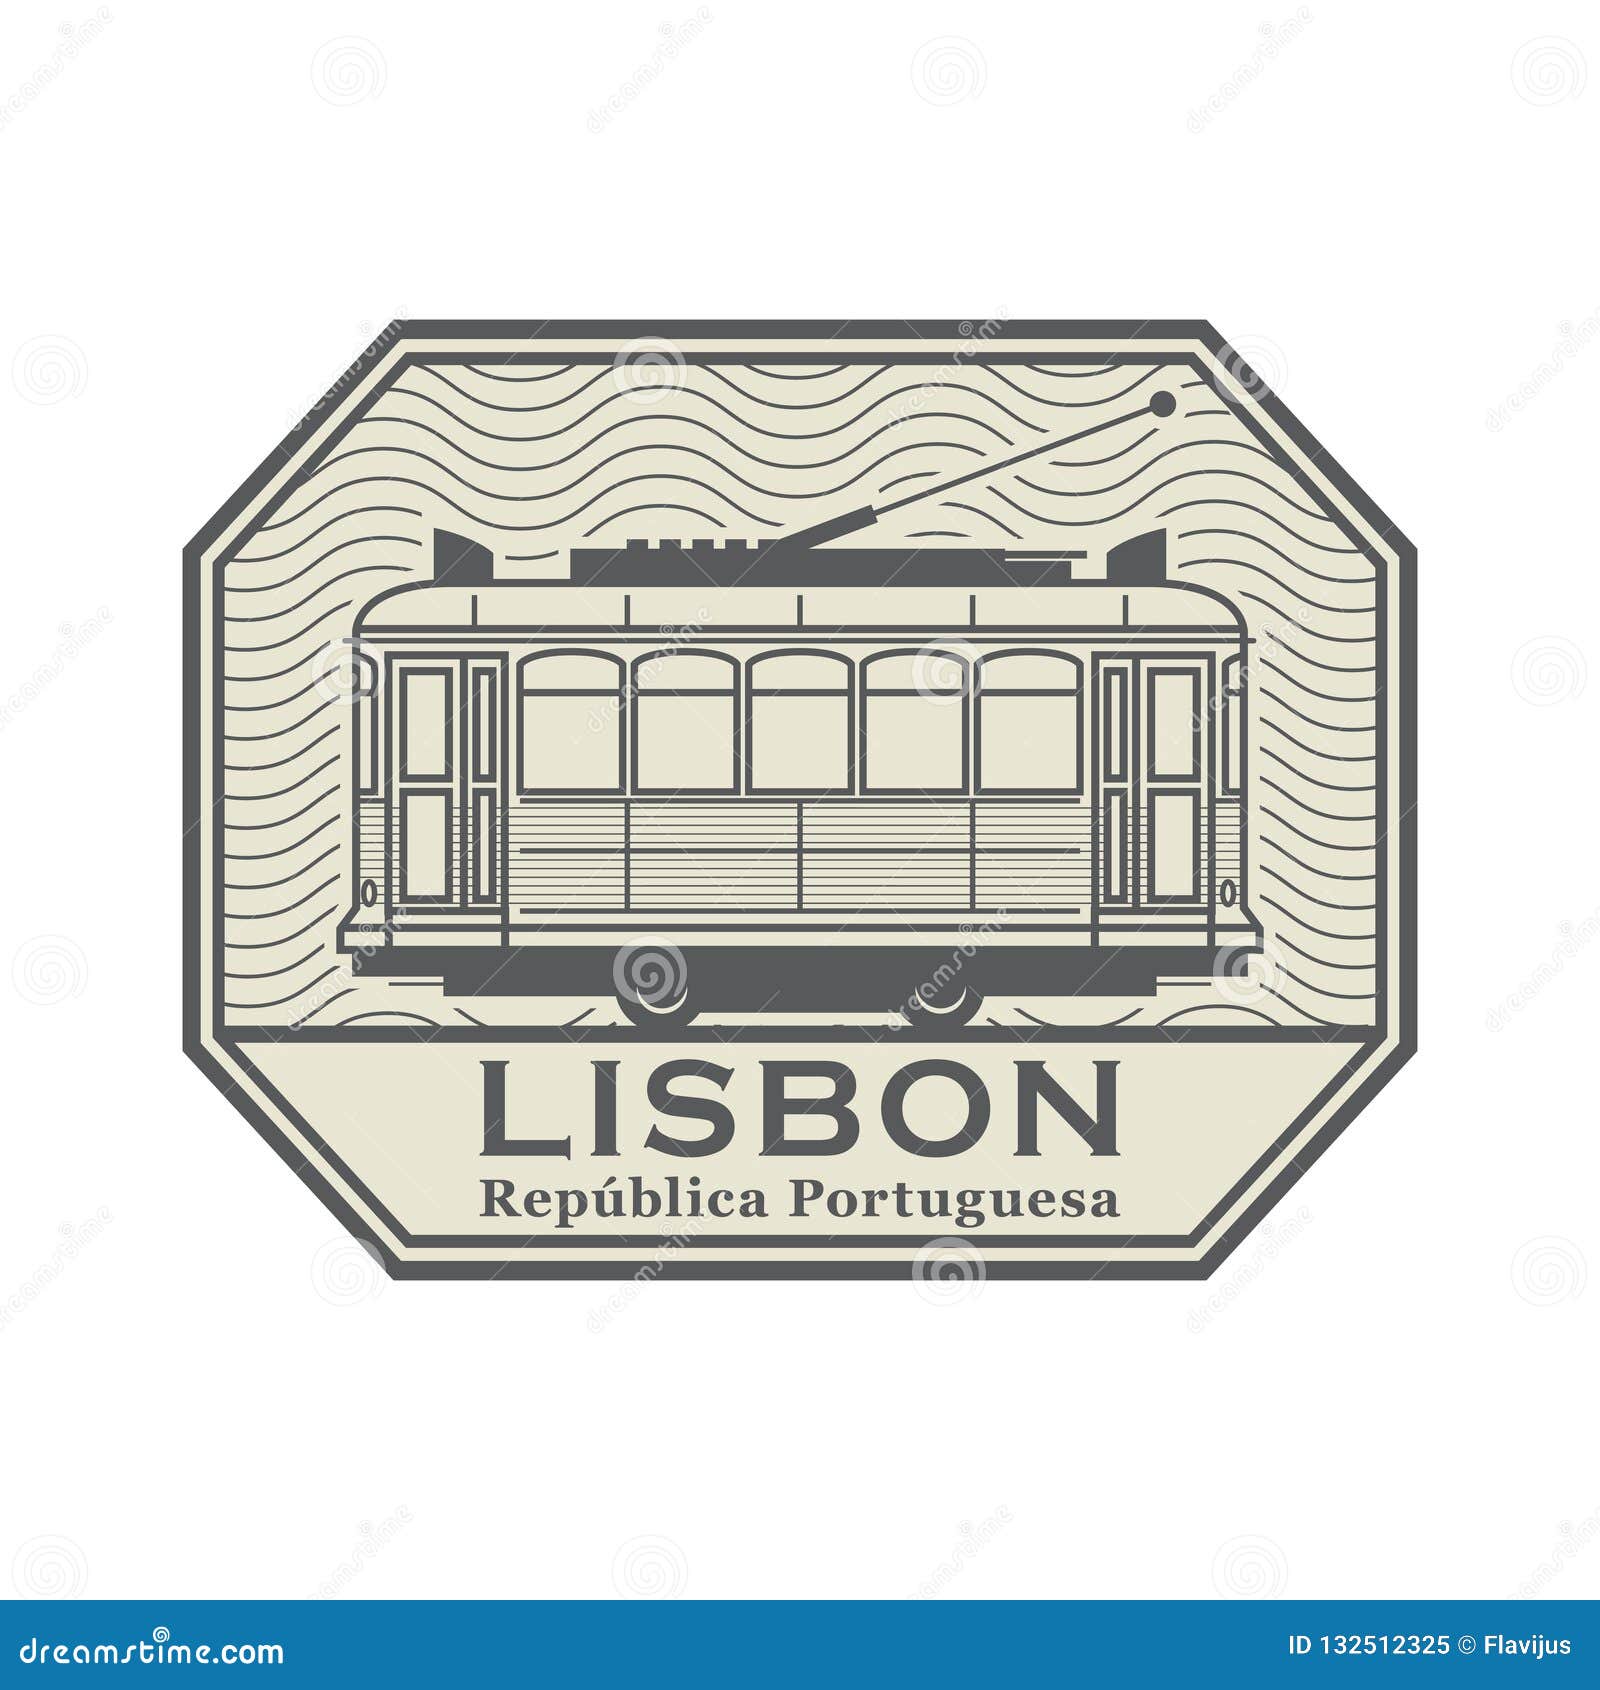 stamp with tram, lisbon